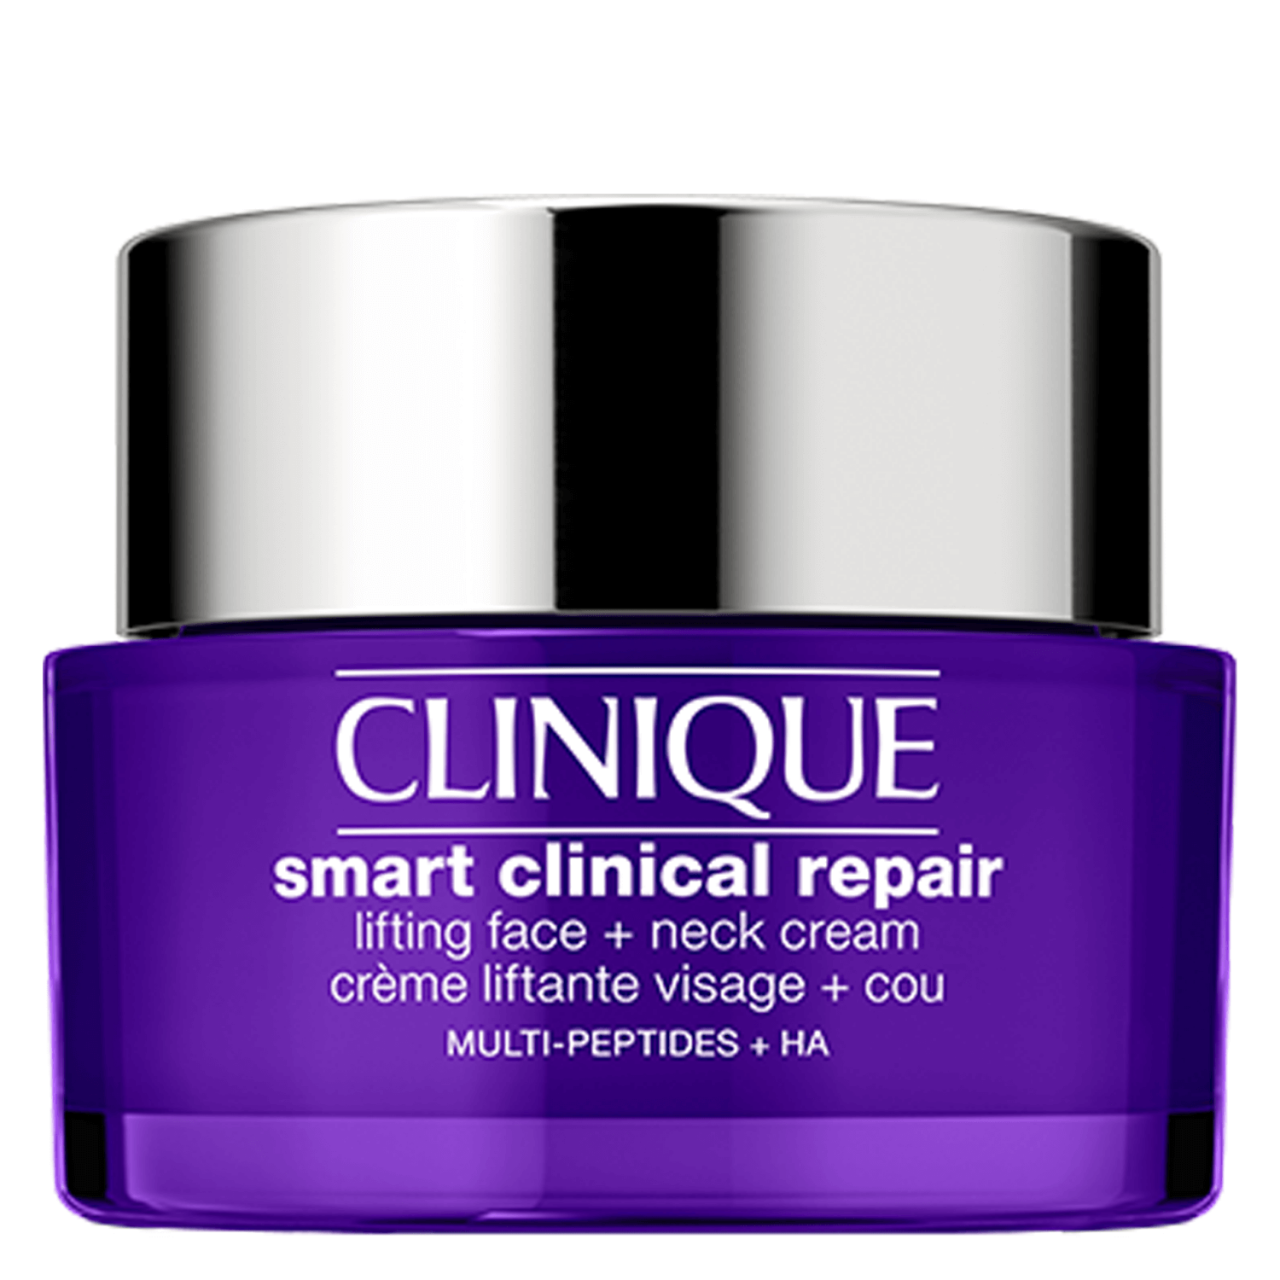 Clinique - Clinique Smart Clinical Repair™ Lifting Face + Neck Cream